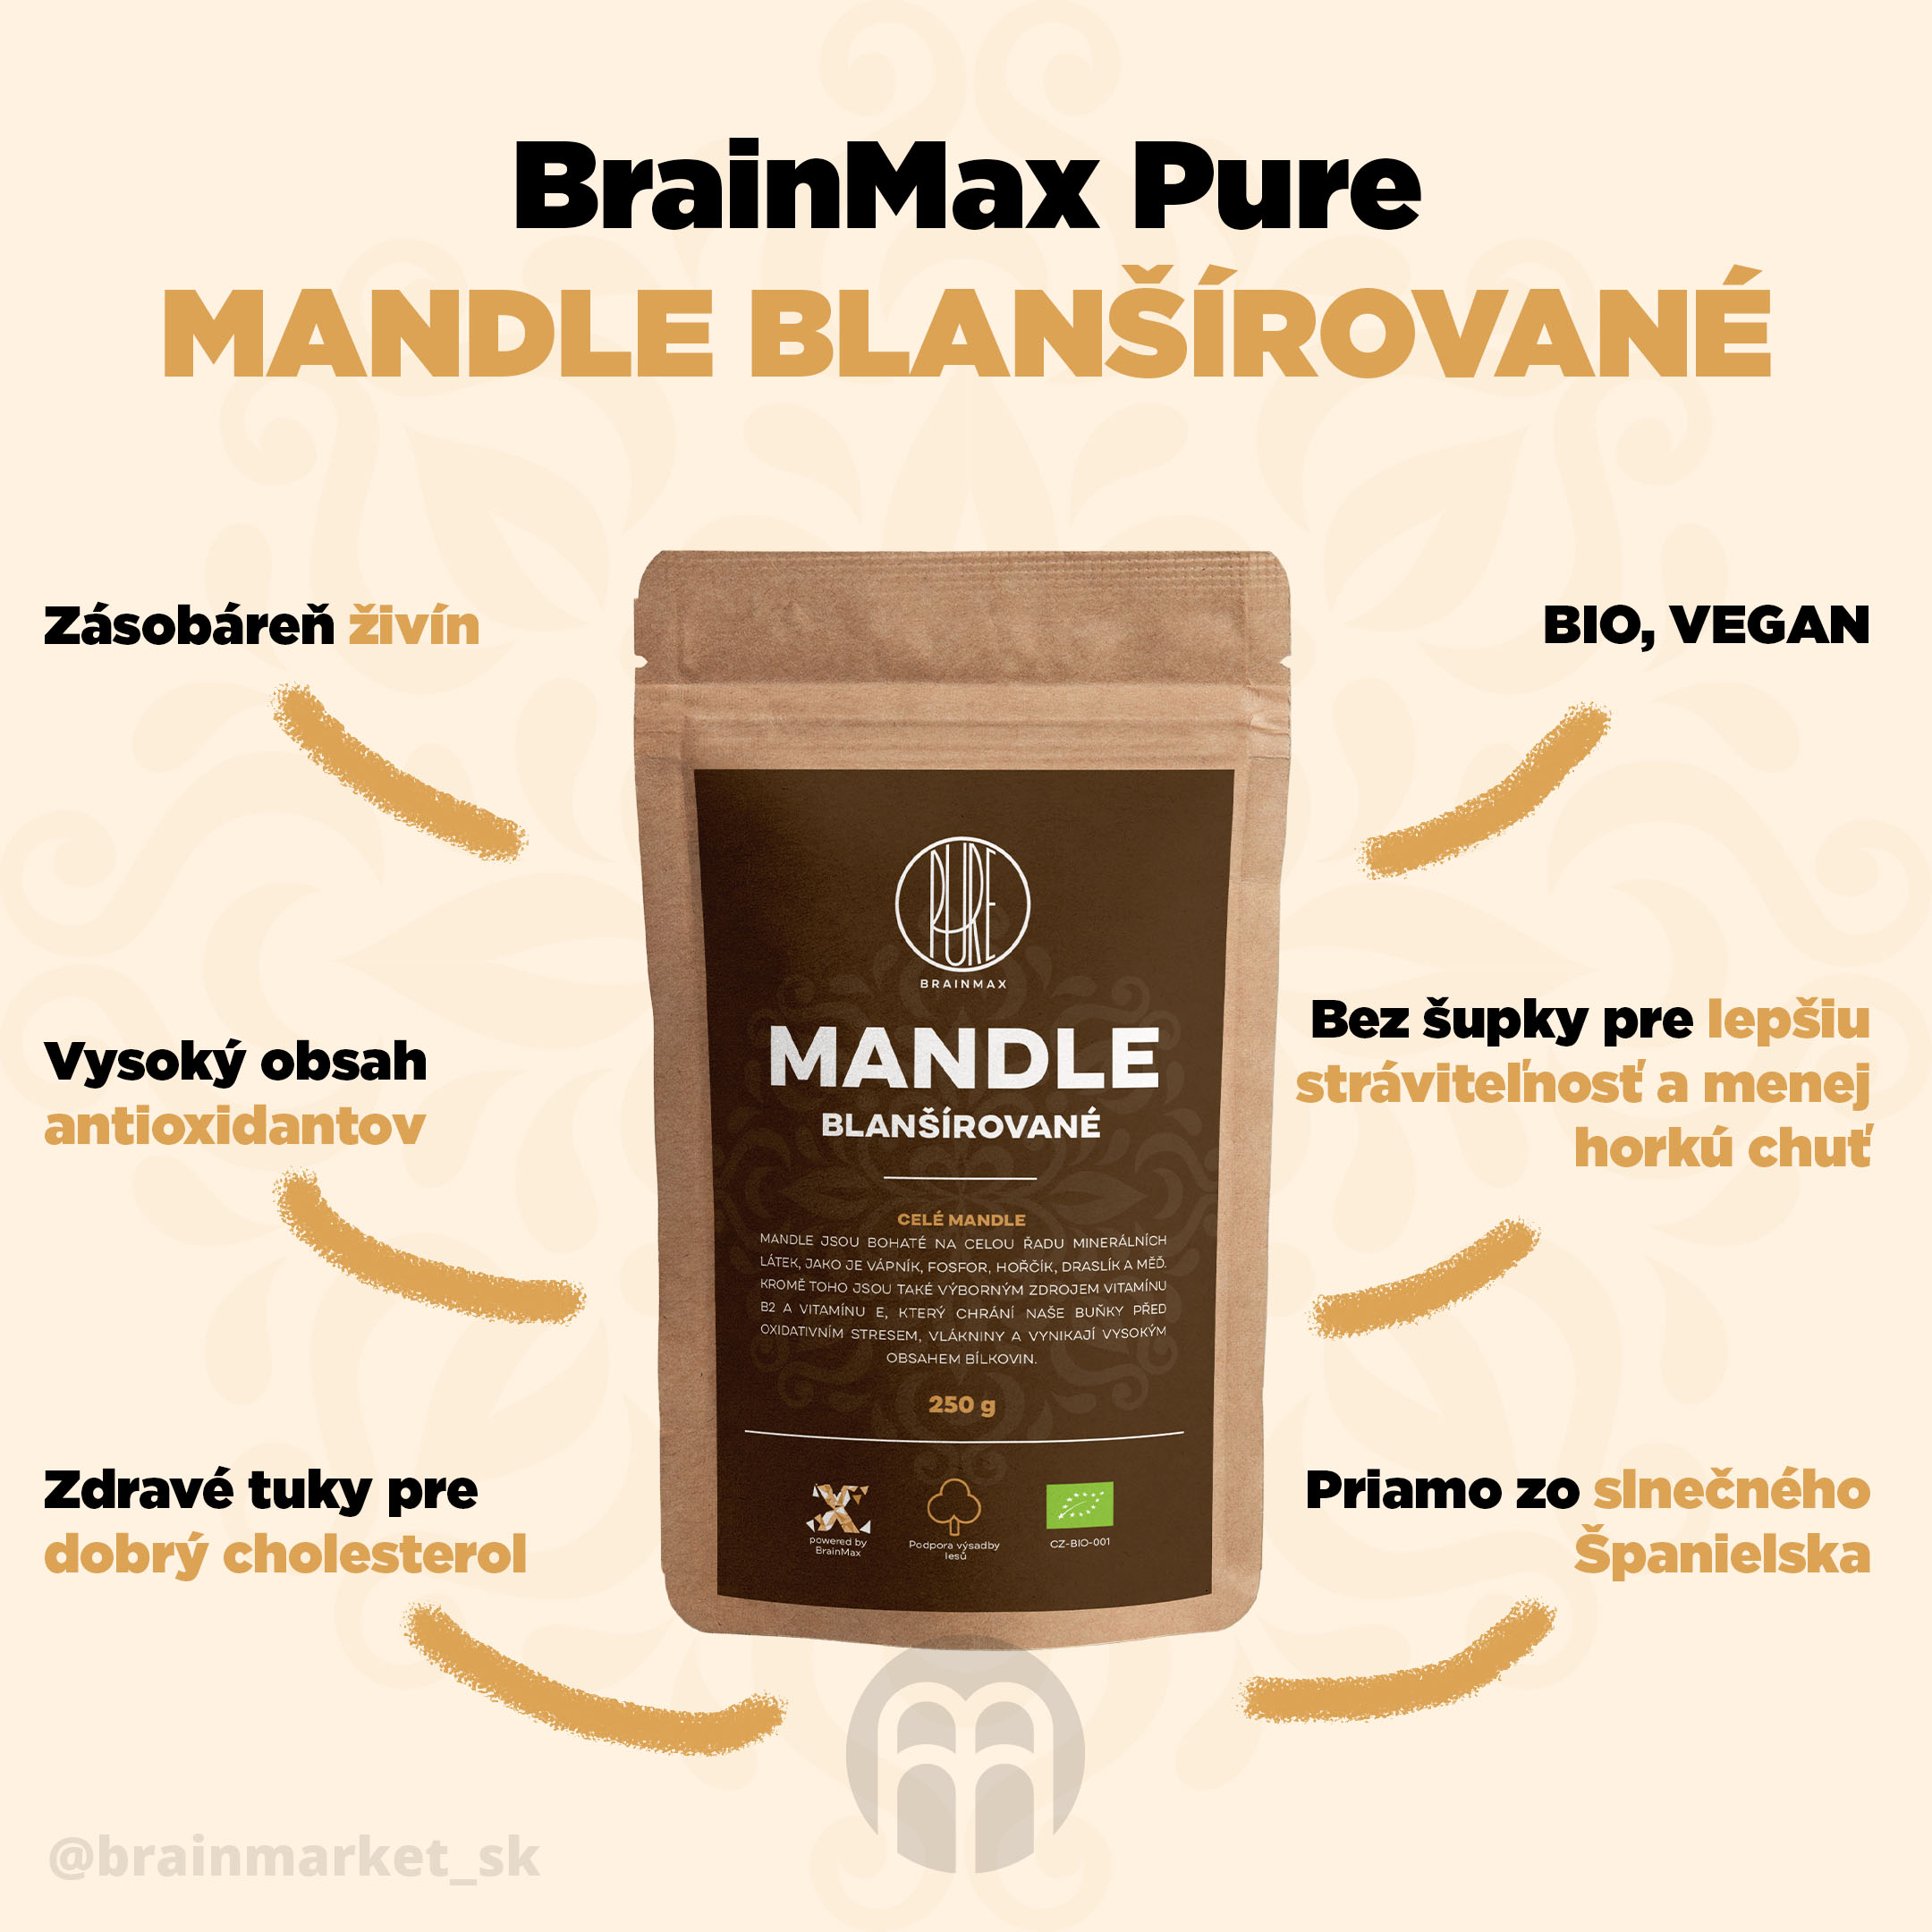 mandle-blanšírovanie-Brainmax-pure-infografika-brainmarket-cz